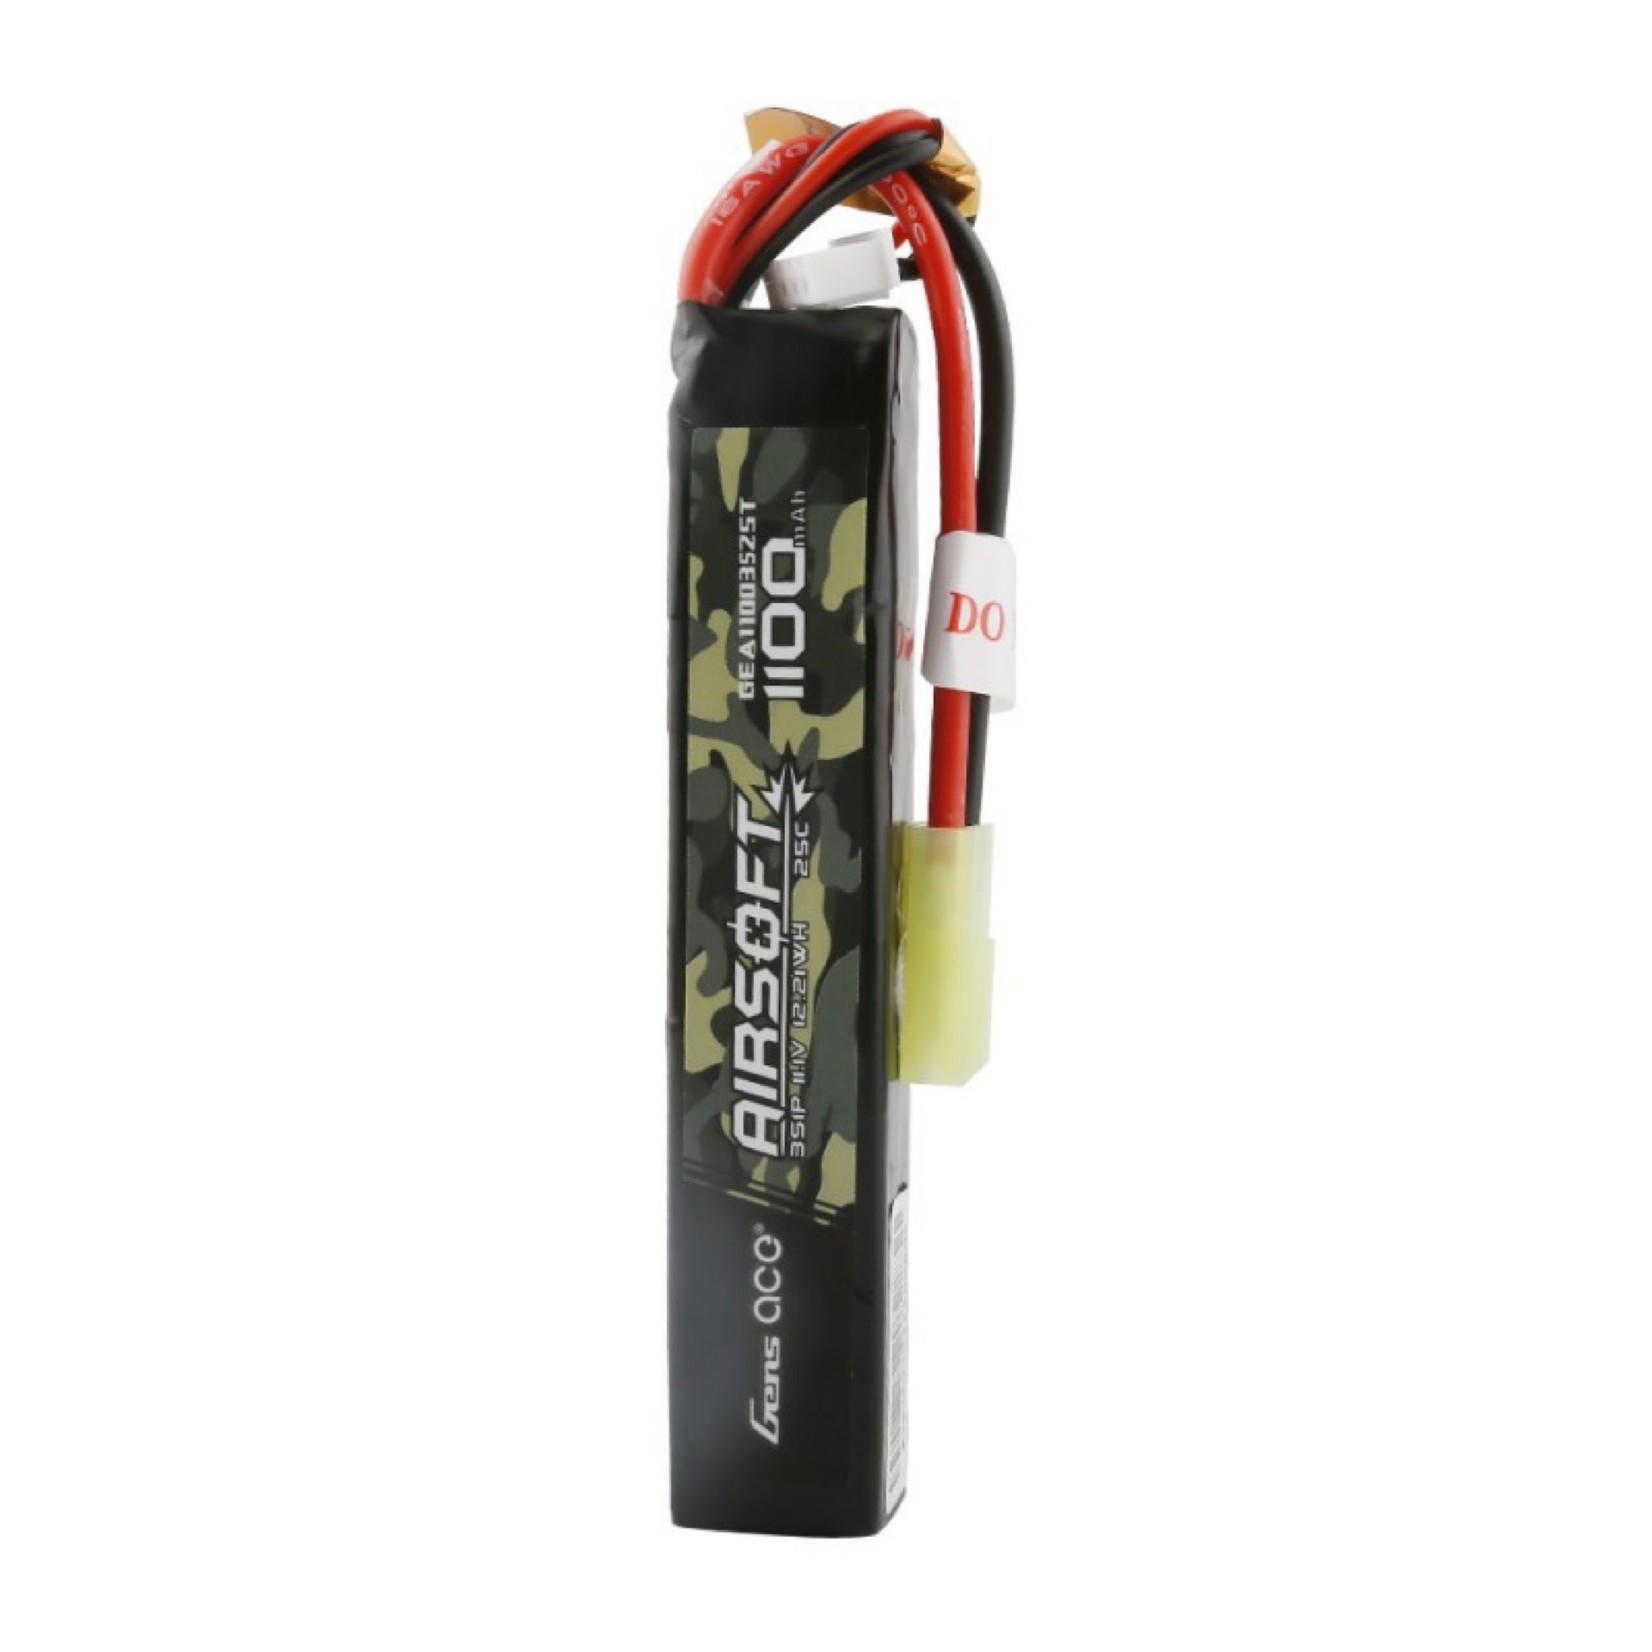 Gens Ace Gens Ace 3S 25C Airsoft LiPo Battery w/Tamiya Plug (11.1V/1100mAh) #GEA11003S25T